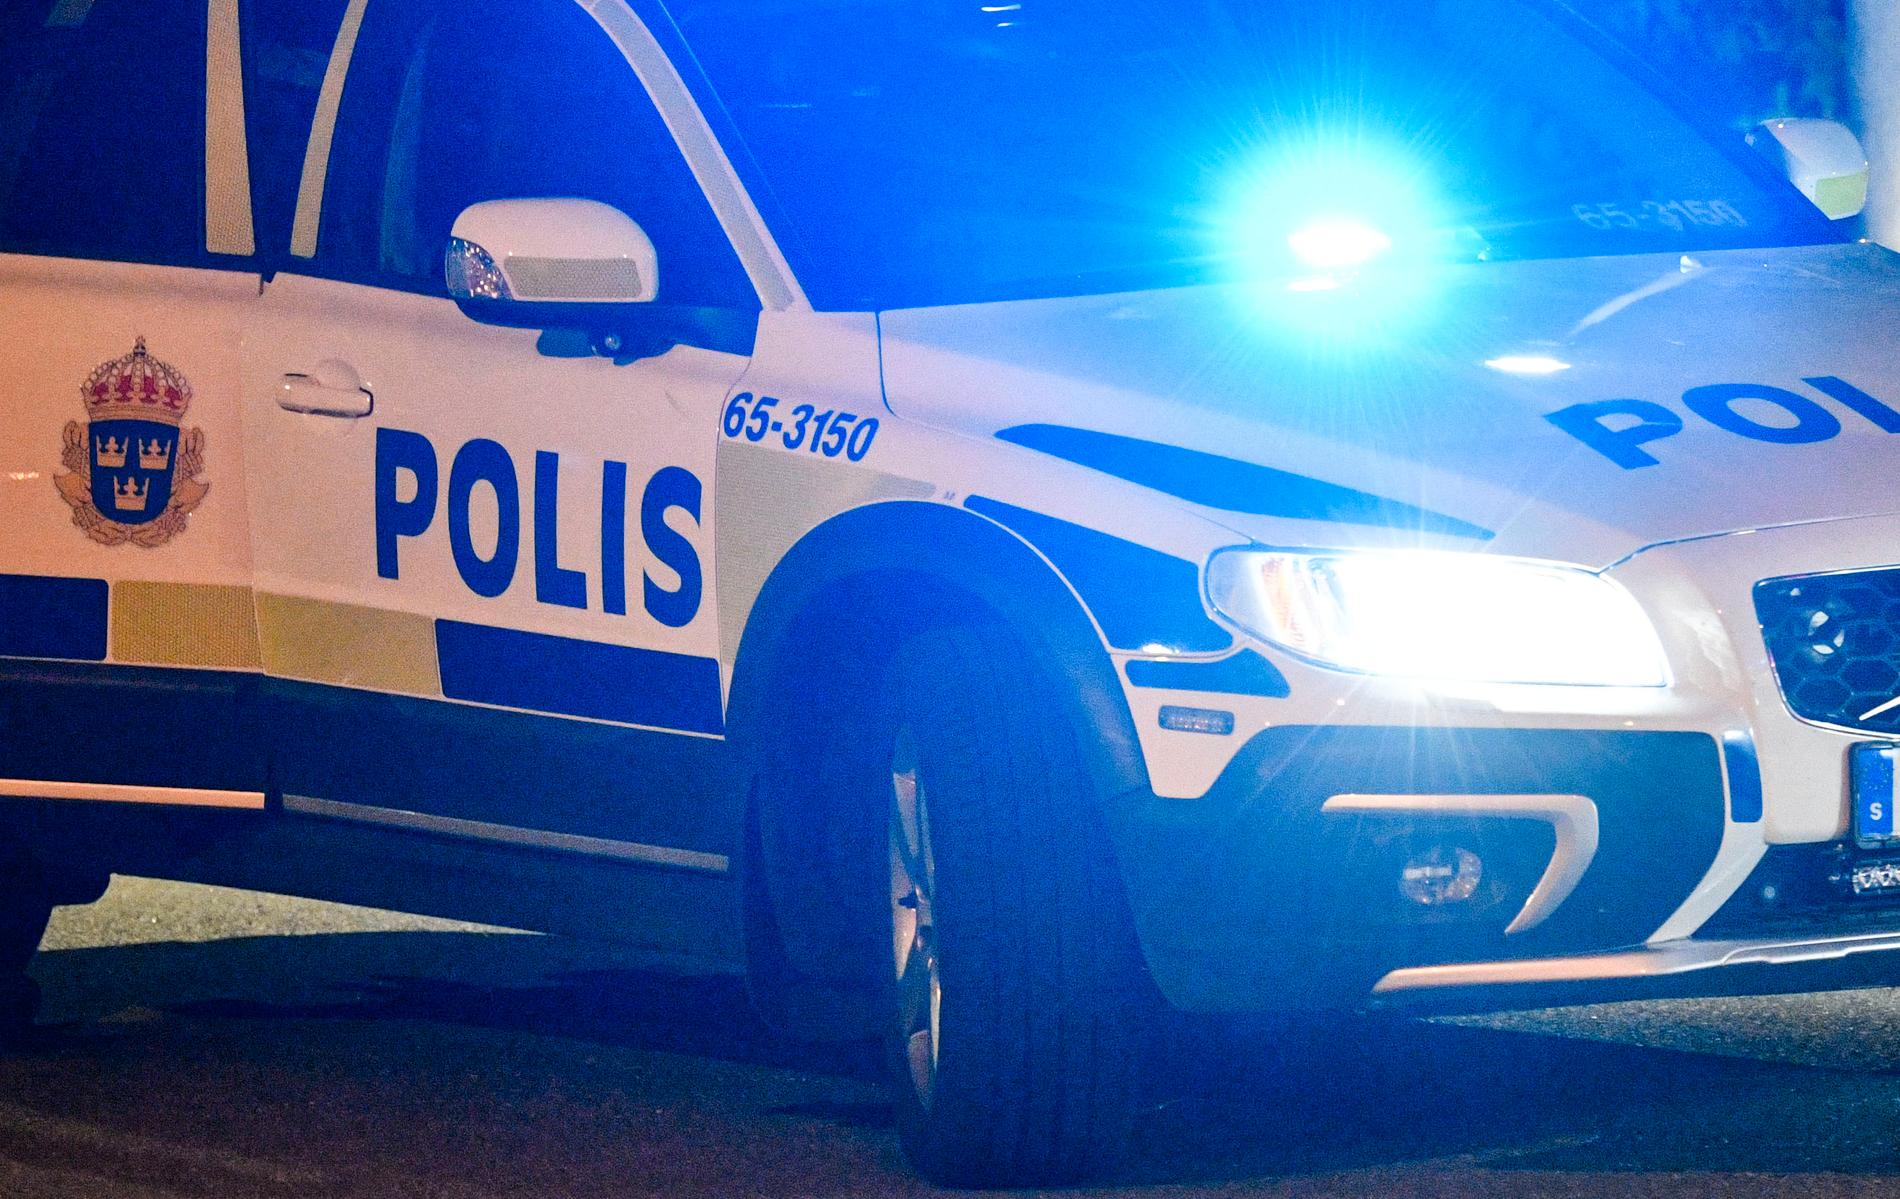 Polis jagar en smitare i Nacka öster om Stockholm. Arkivbild.